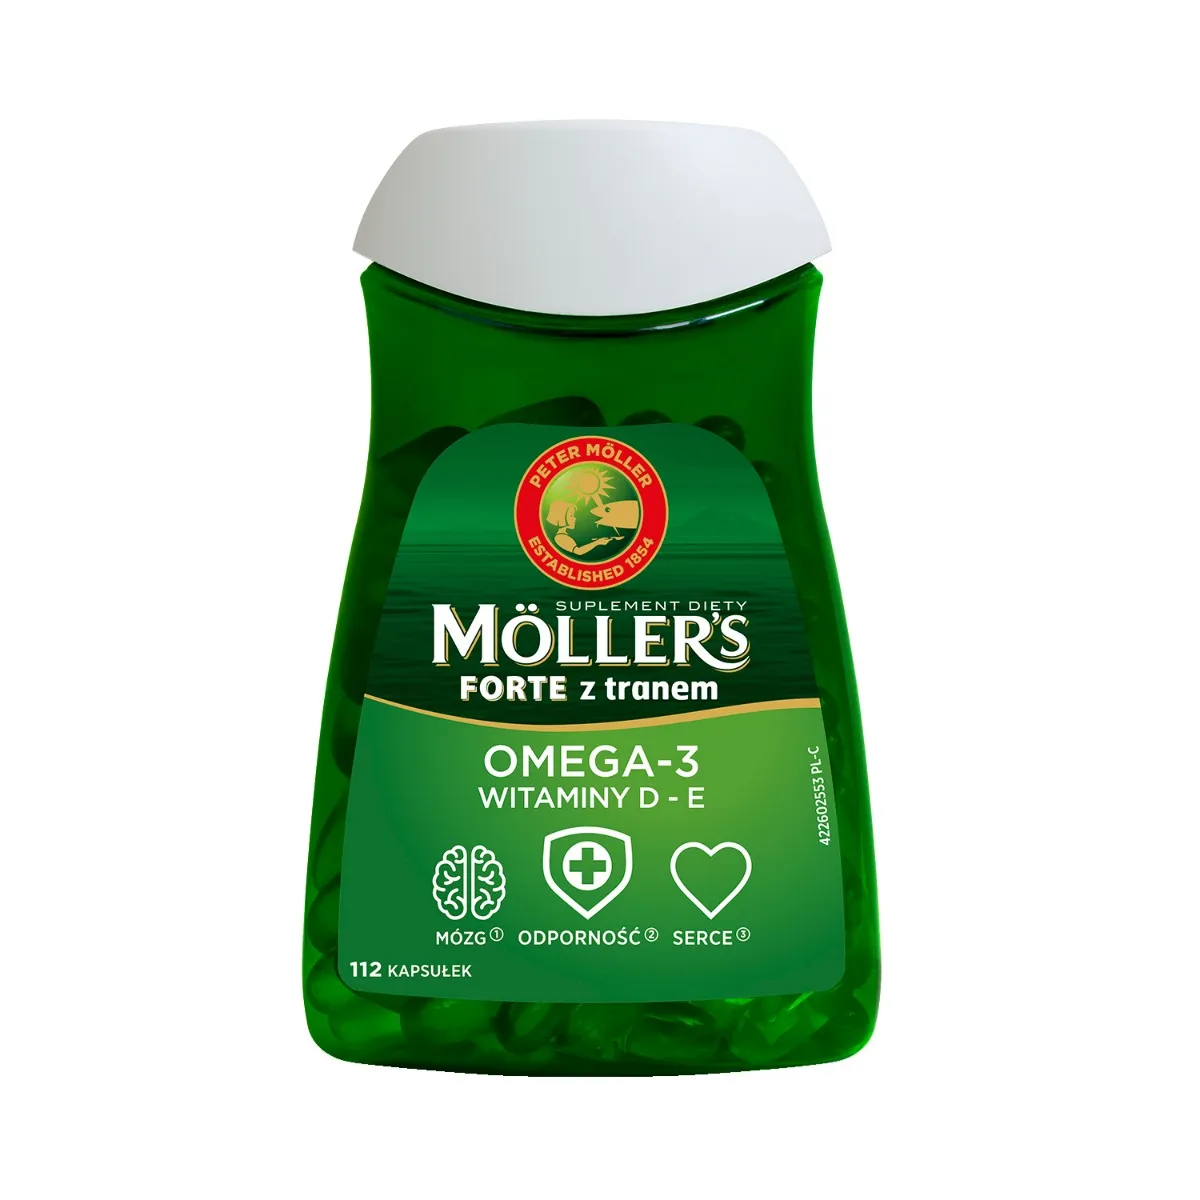 Mollers Forte z tranem, Omega-3, suplement diety, 112 kapsułek